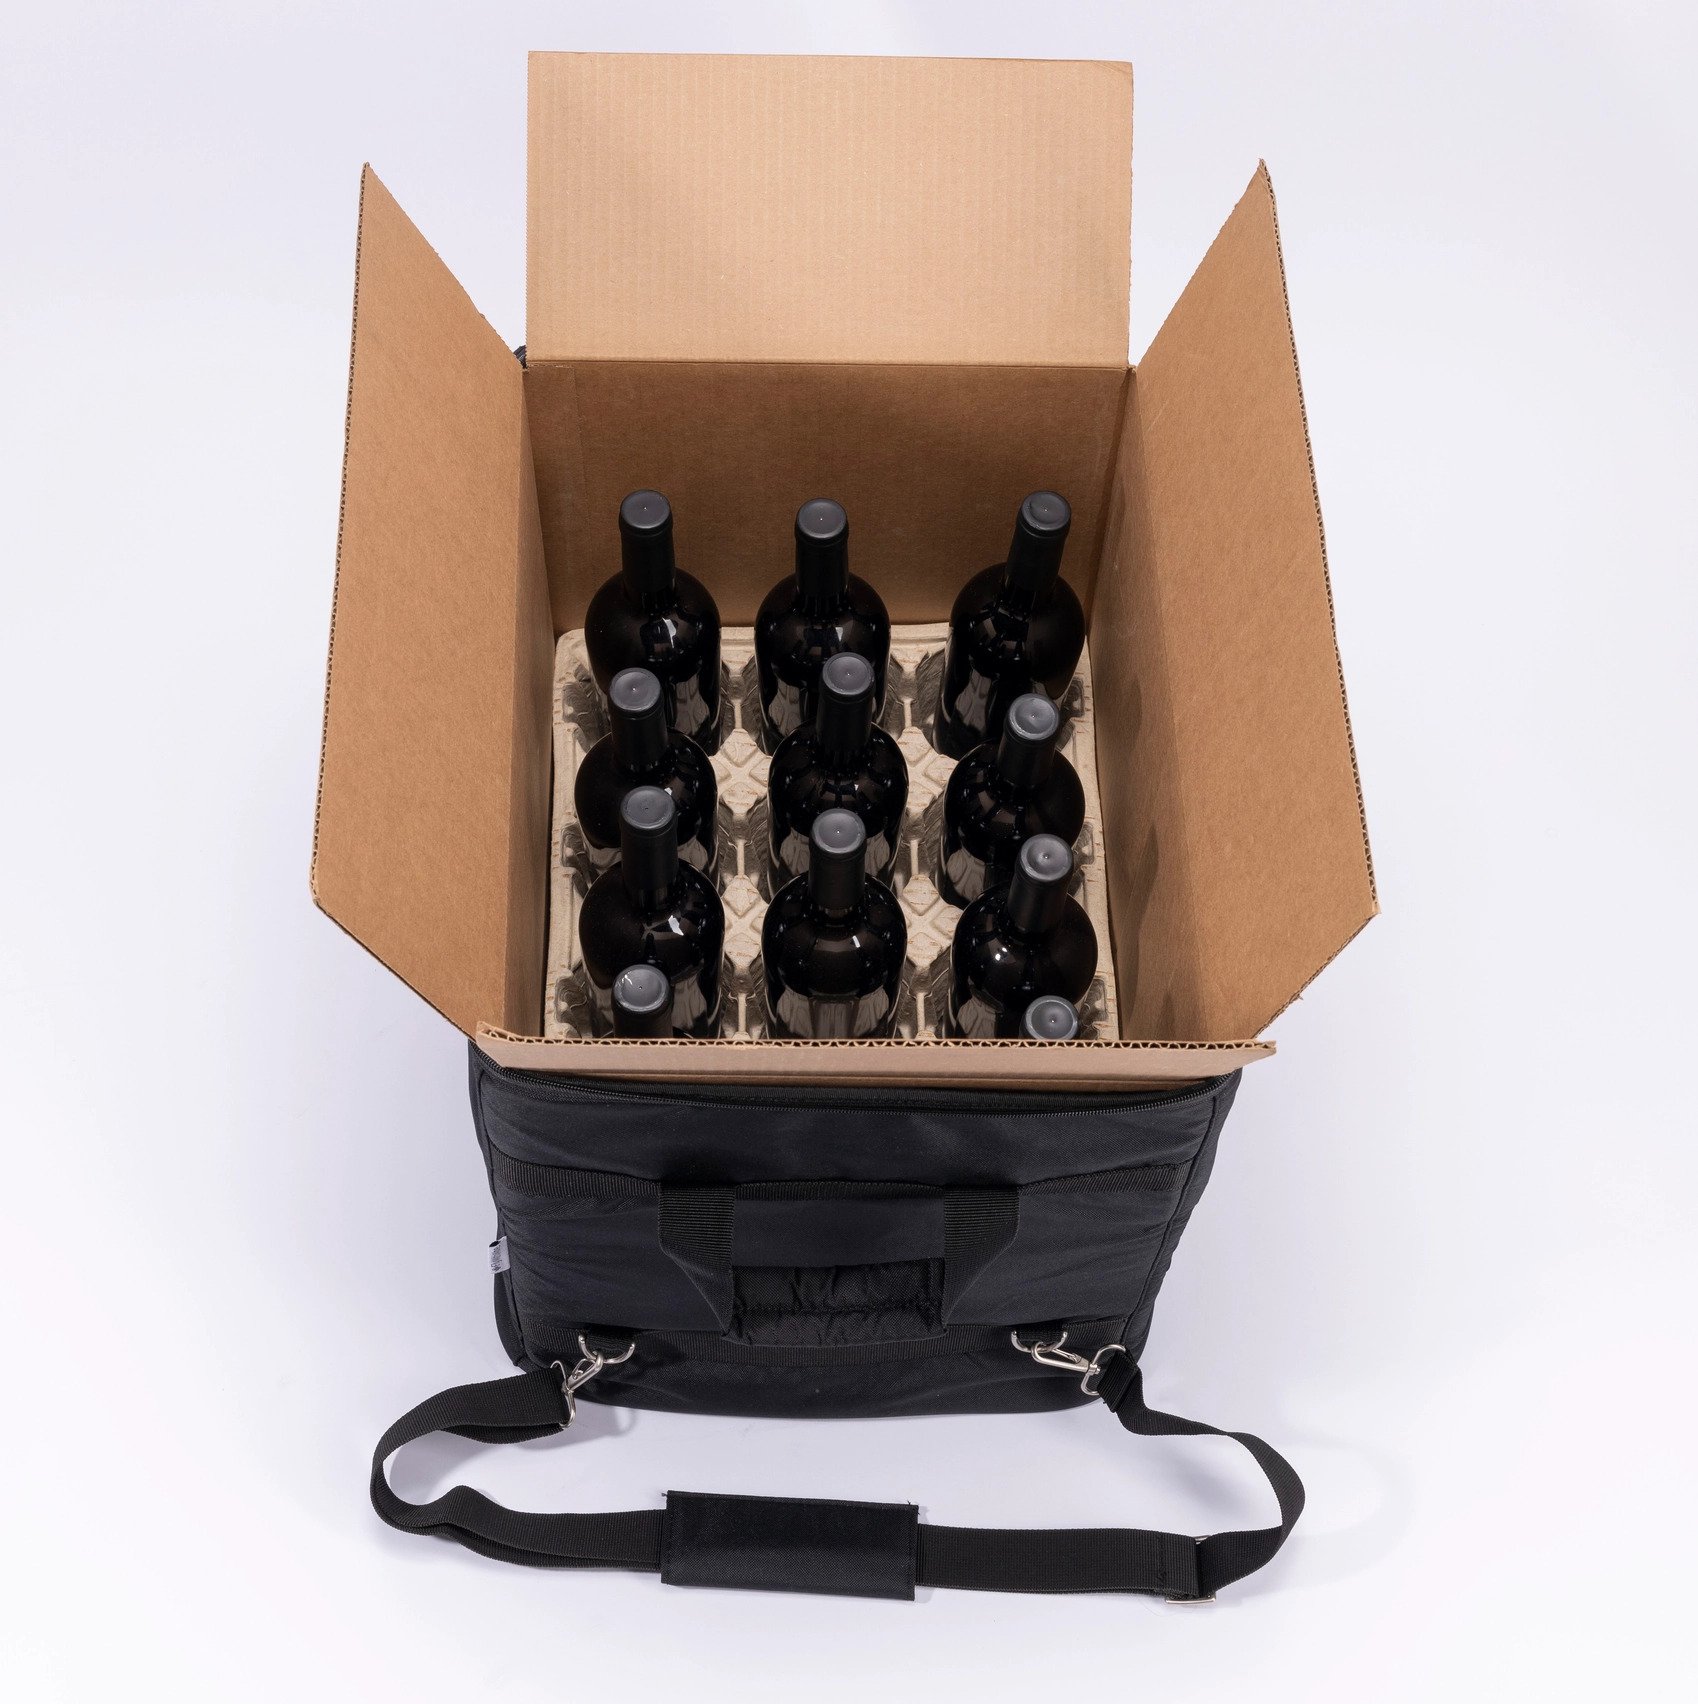 Vinxpress 12-bottle Carrier